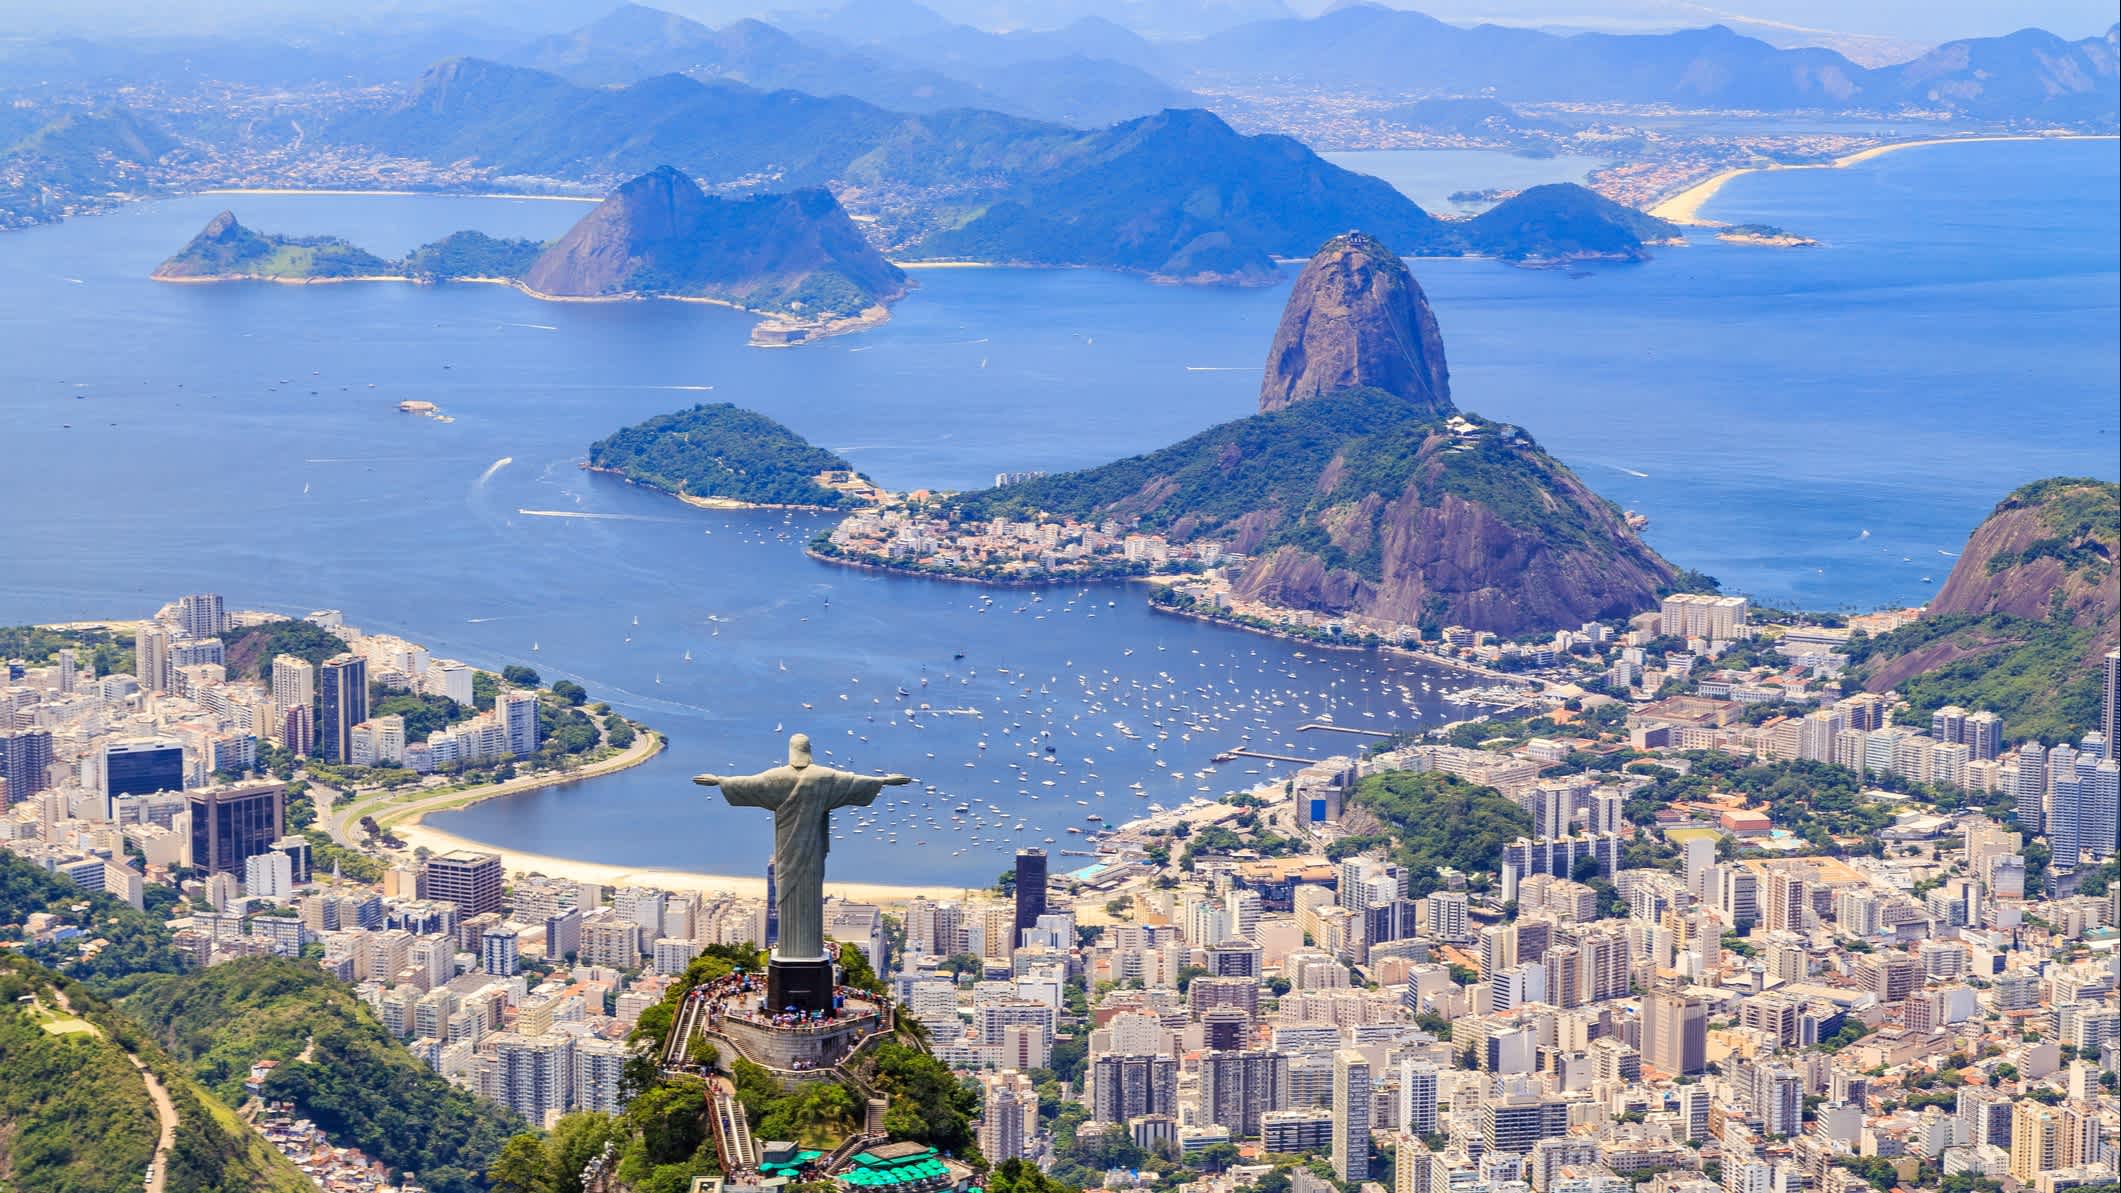 tourism ranking brazil